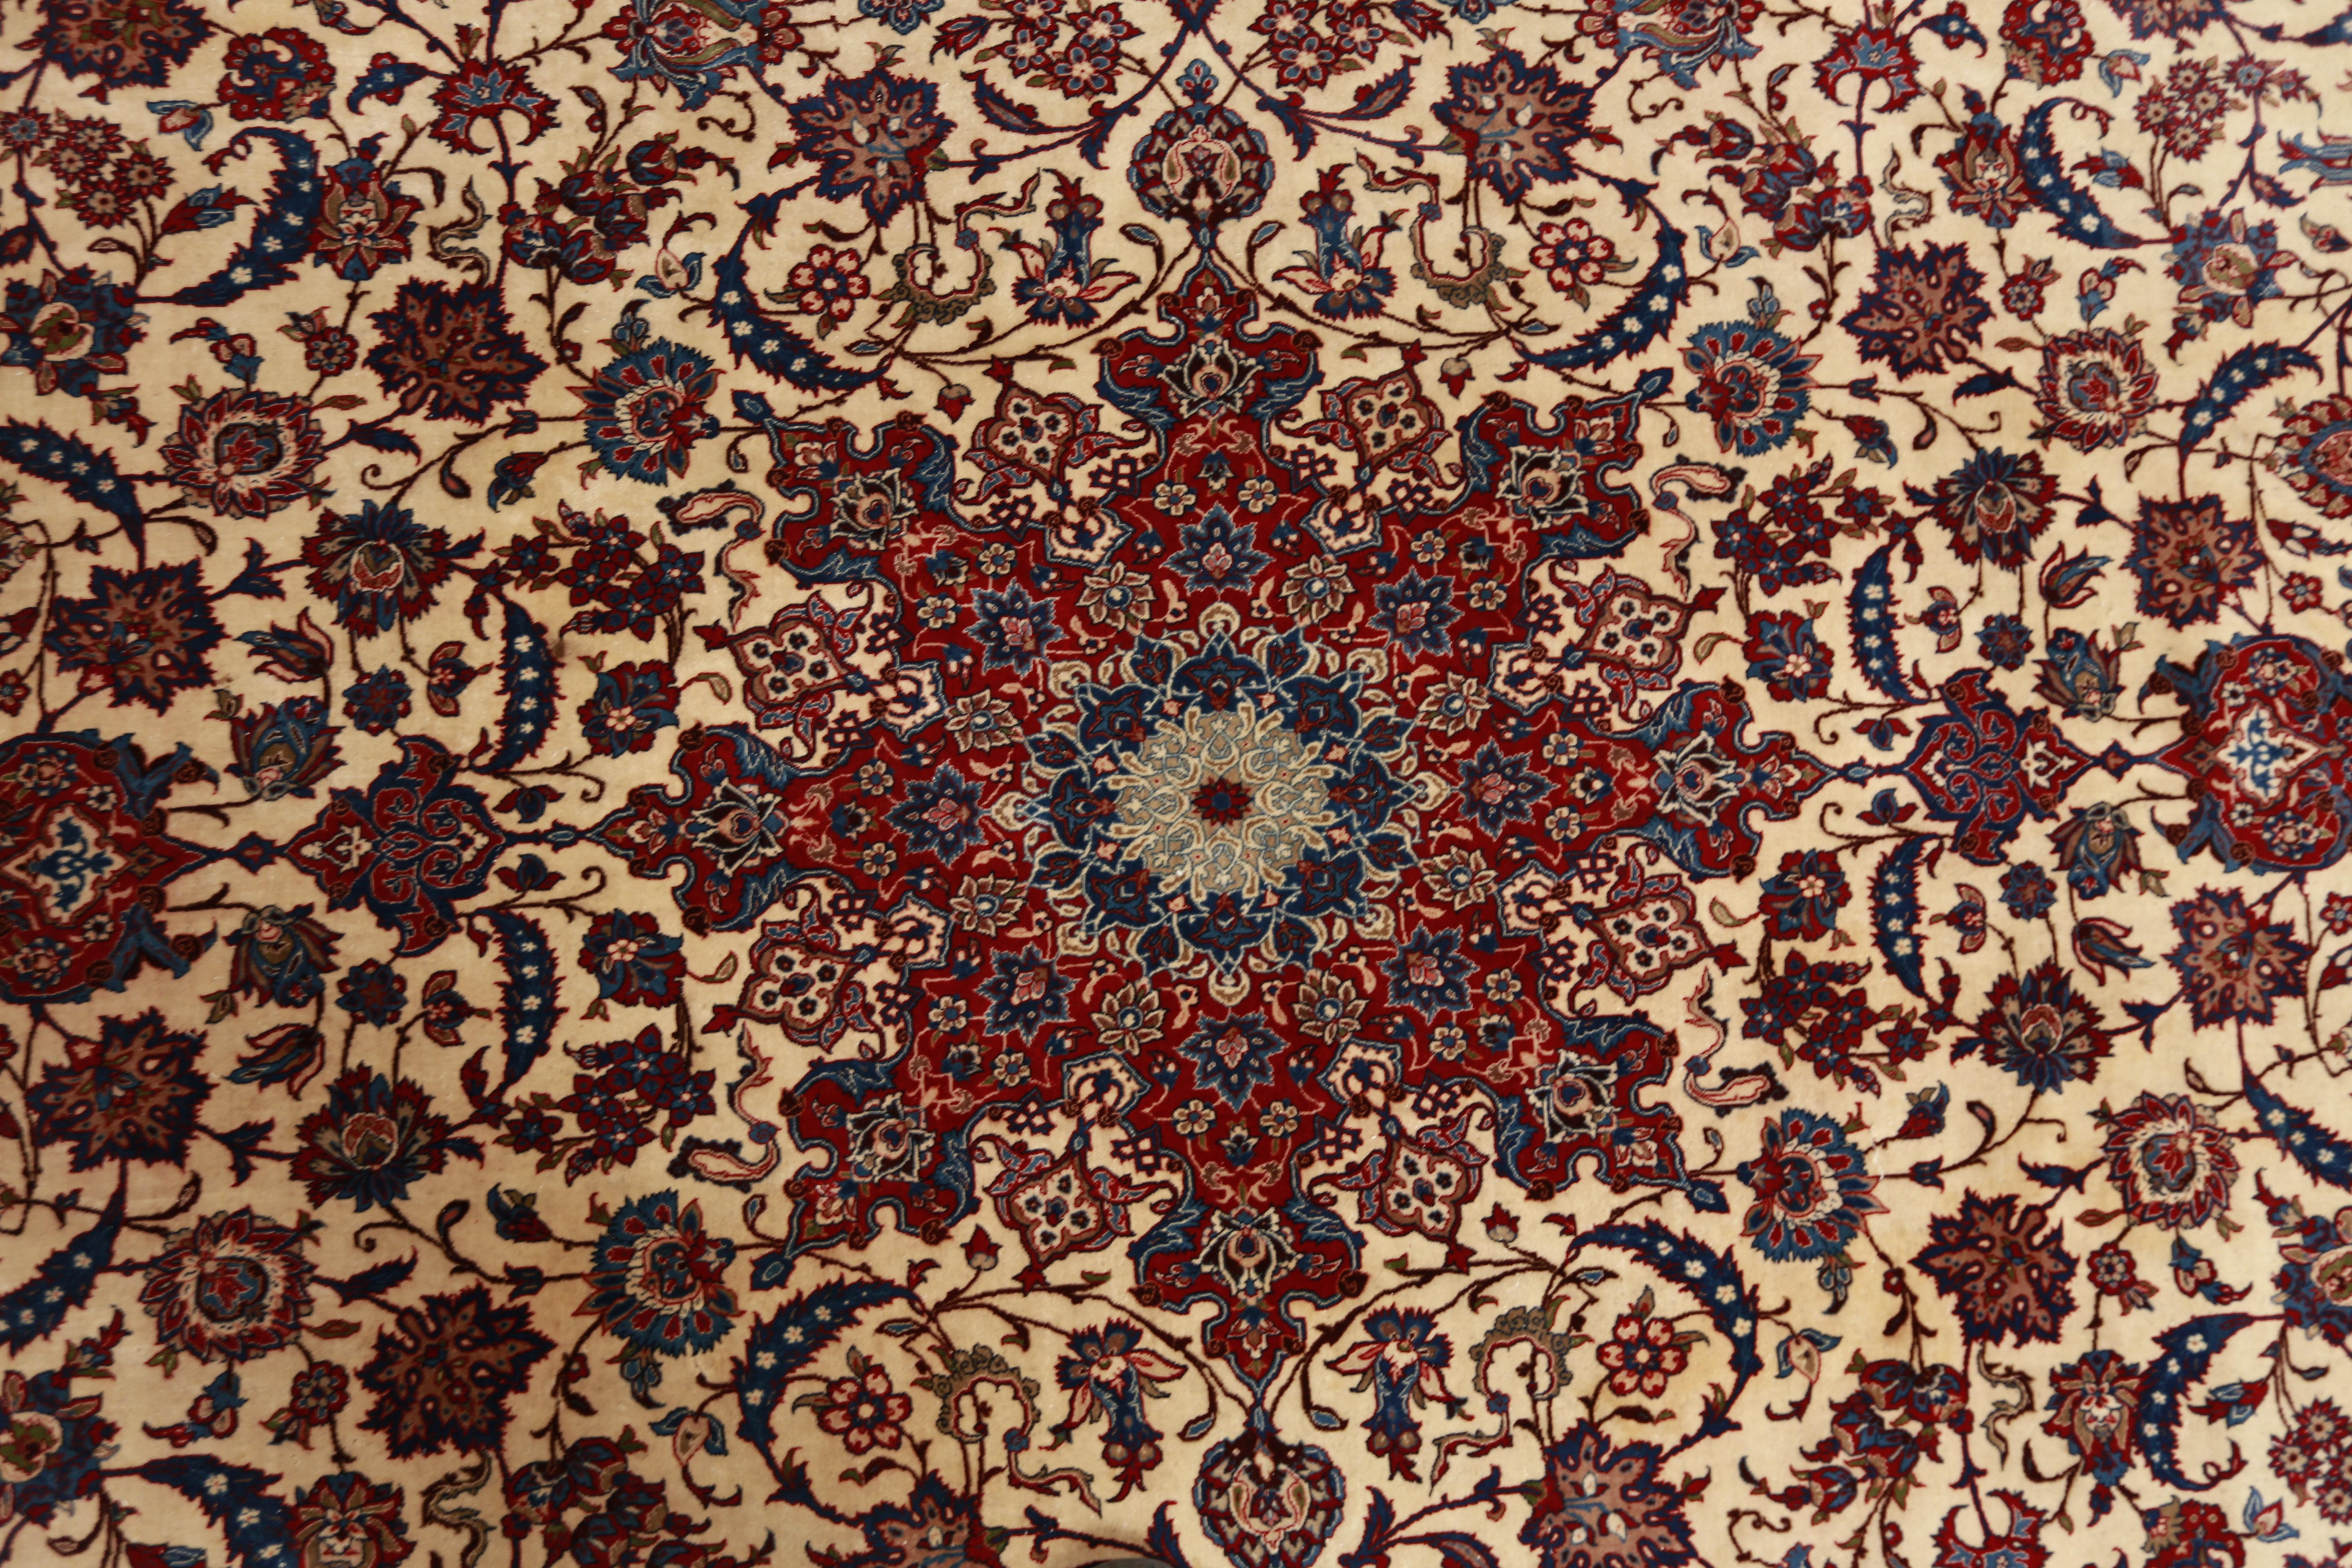 Late 20th Century Isfahan Persian carpet 400 X 260 cm million knots per m2 For Sale